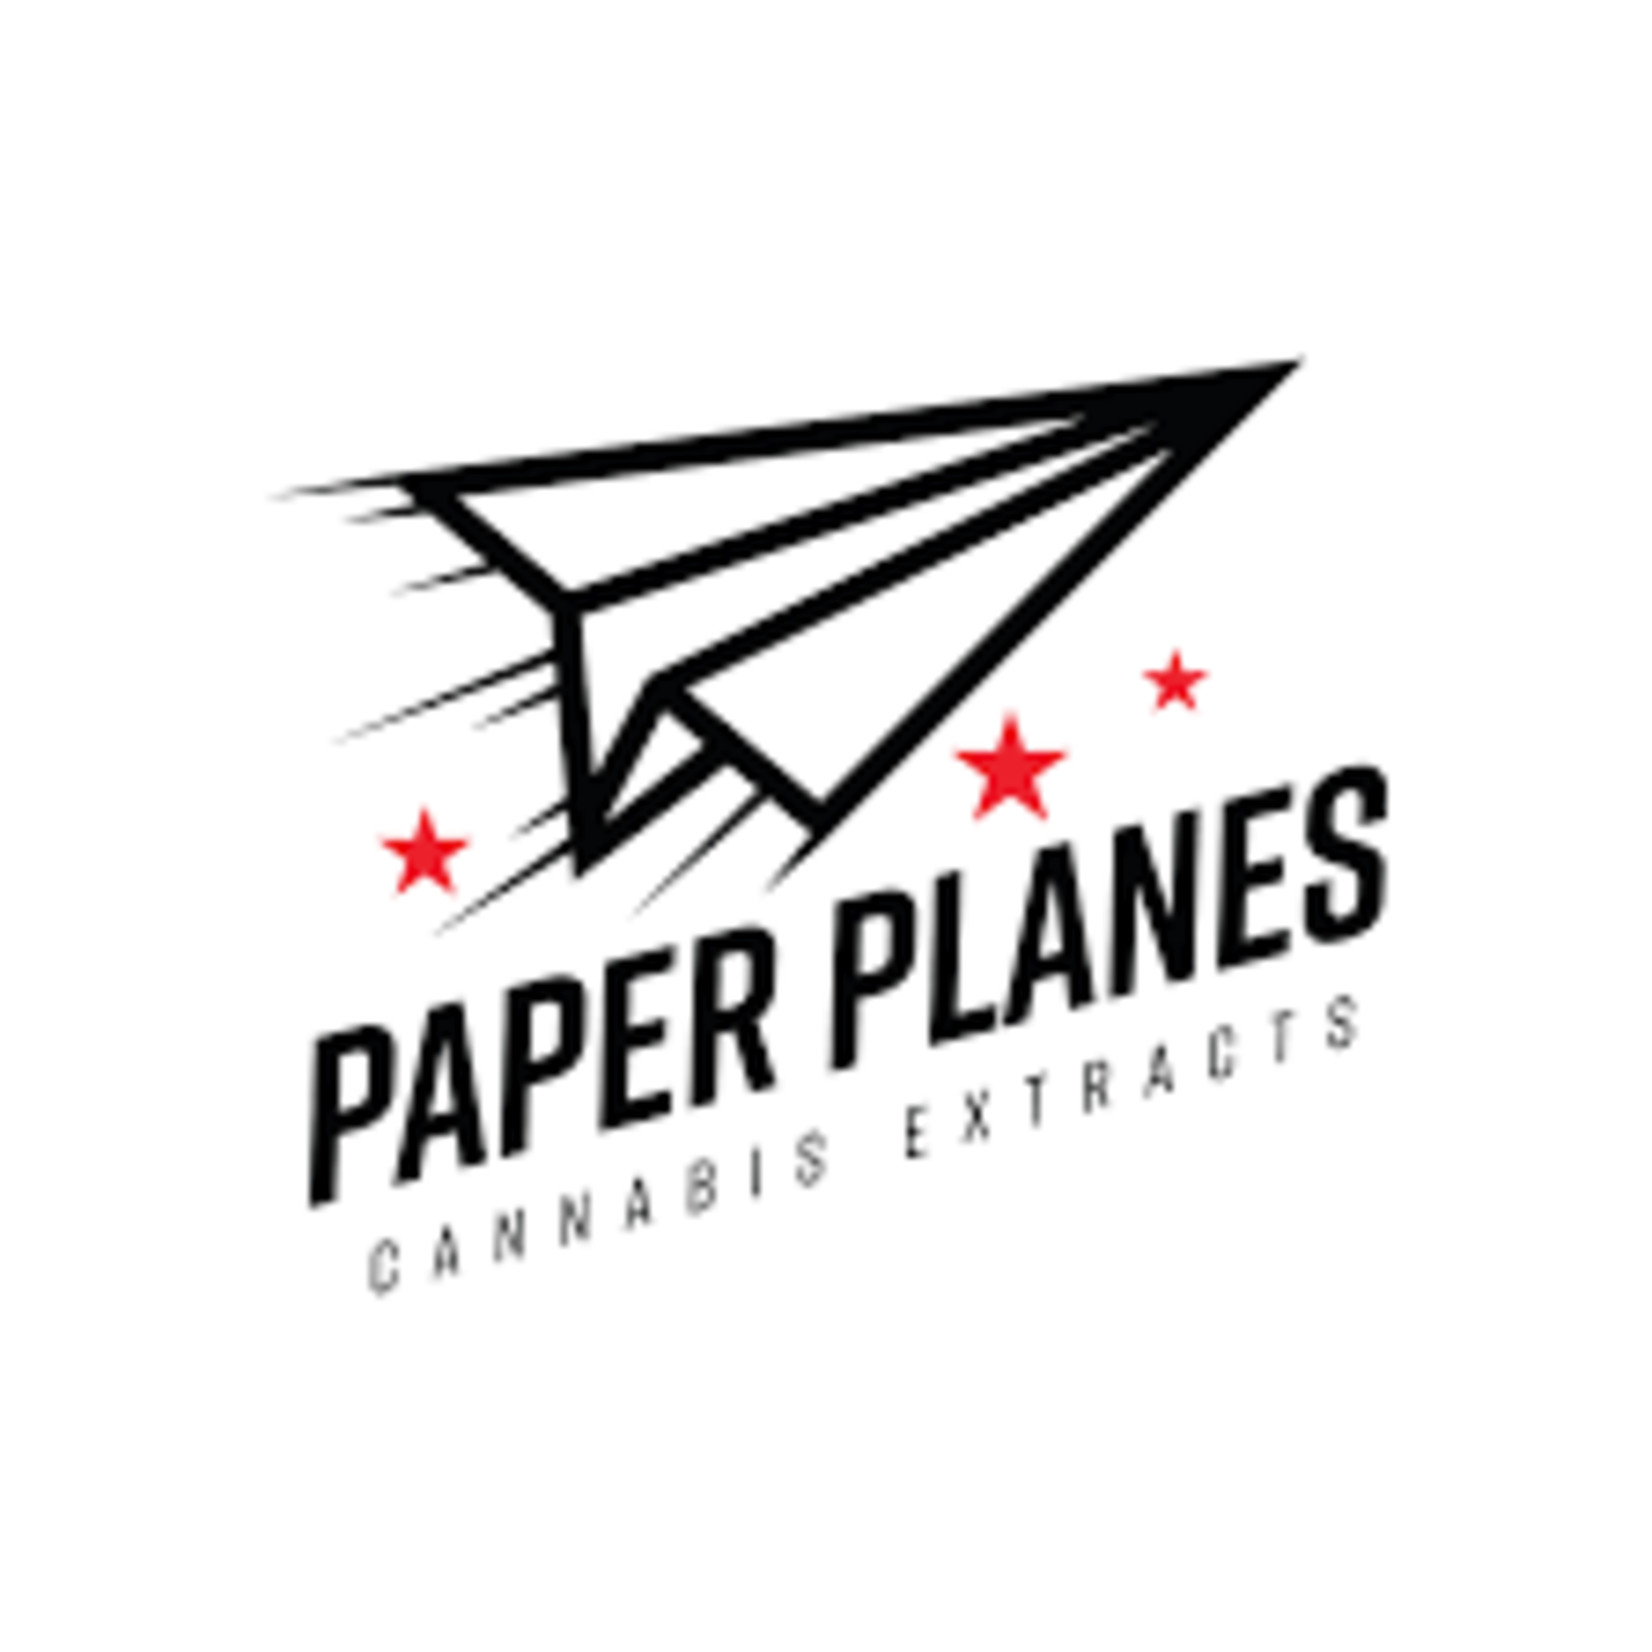 Paper Planes - Carbon Fiber